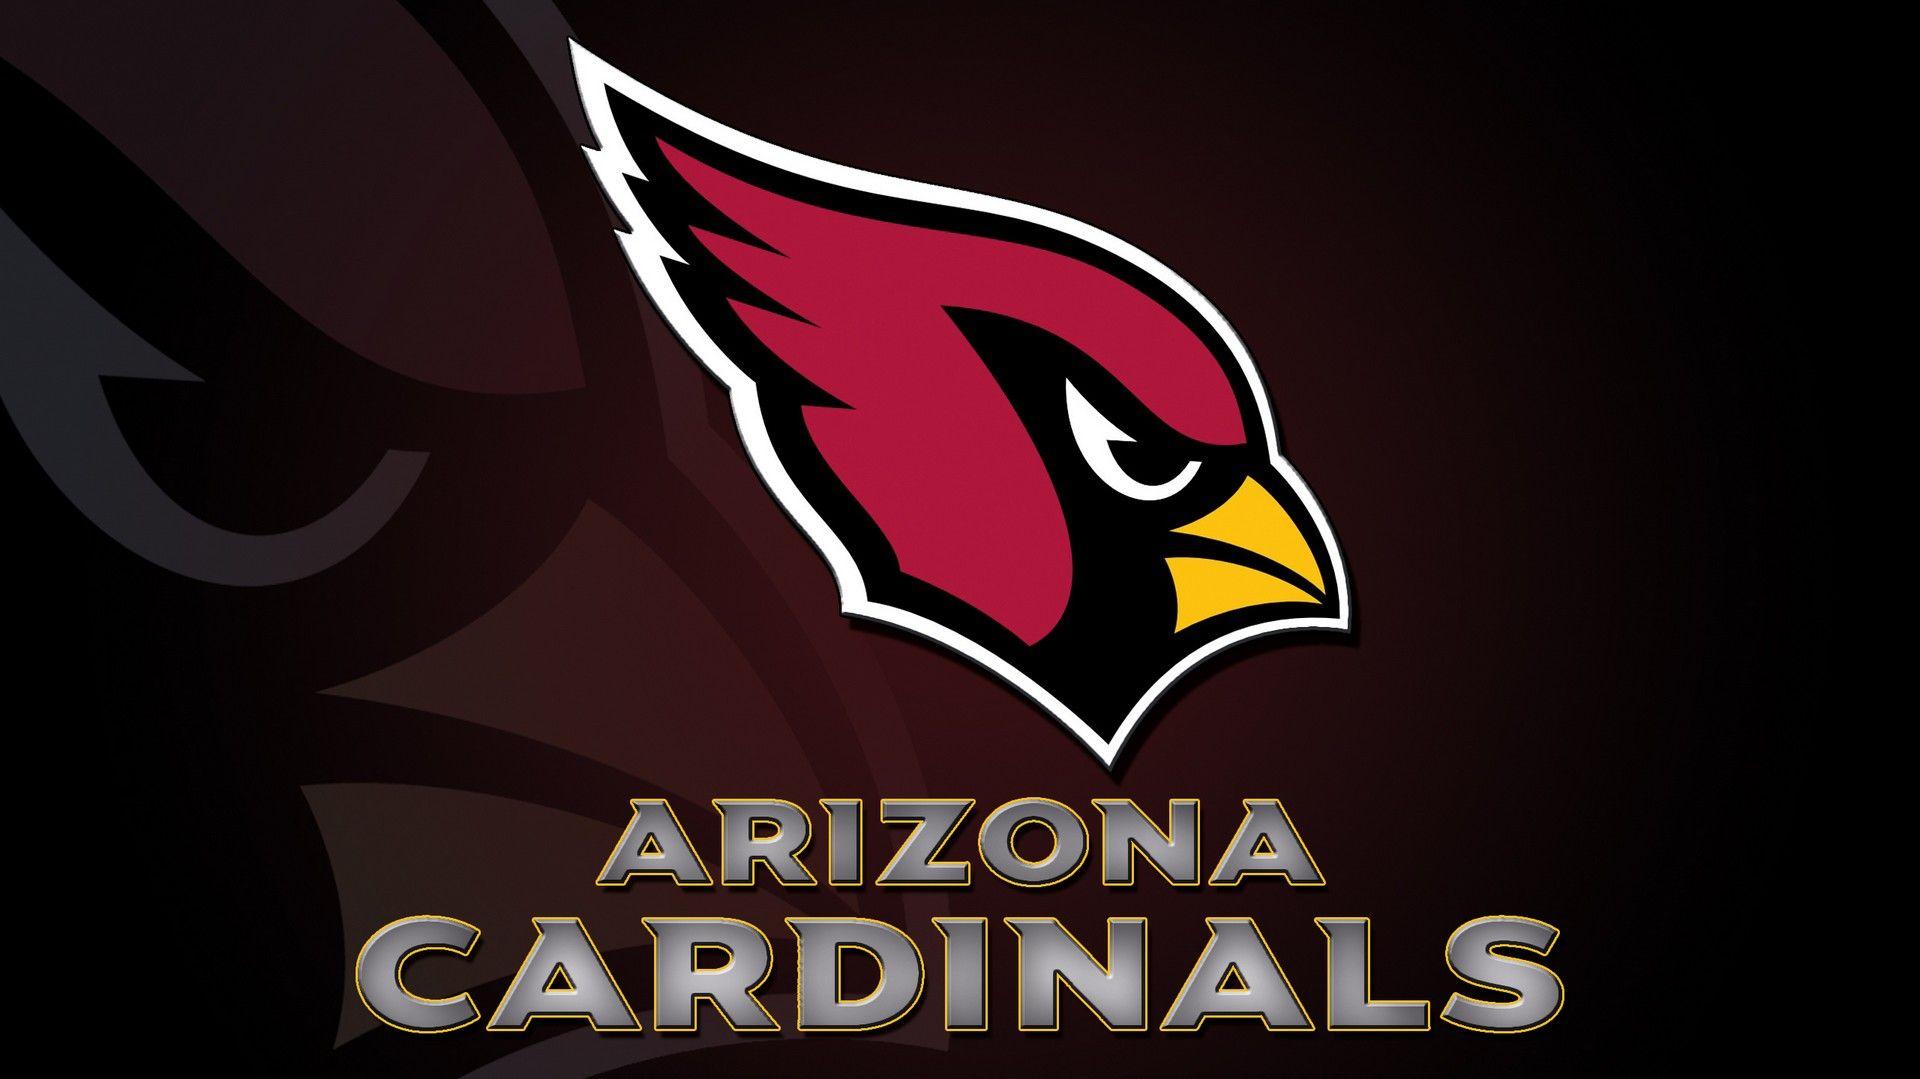 Arizona Cardinals Wallpaper HD Nfl Football